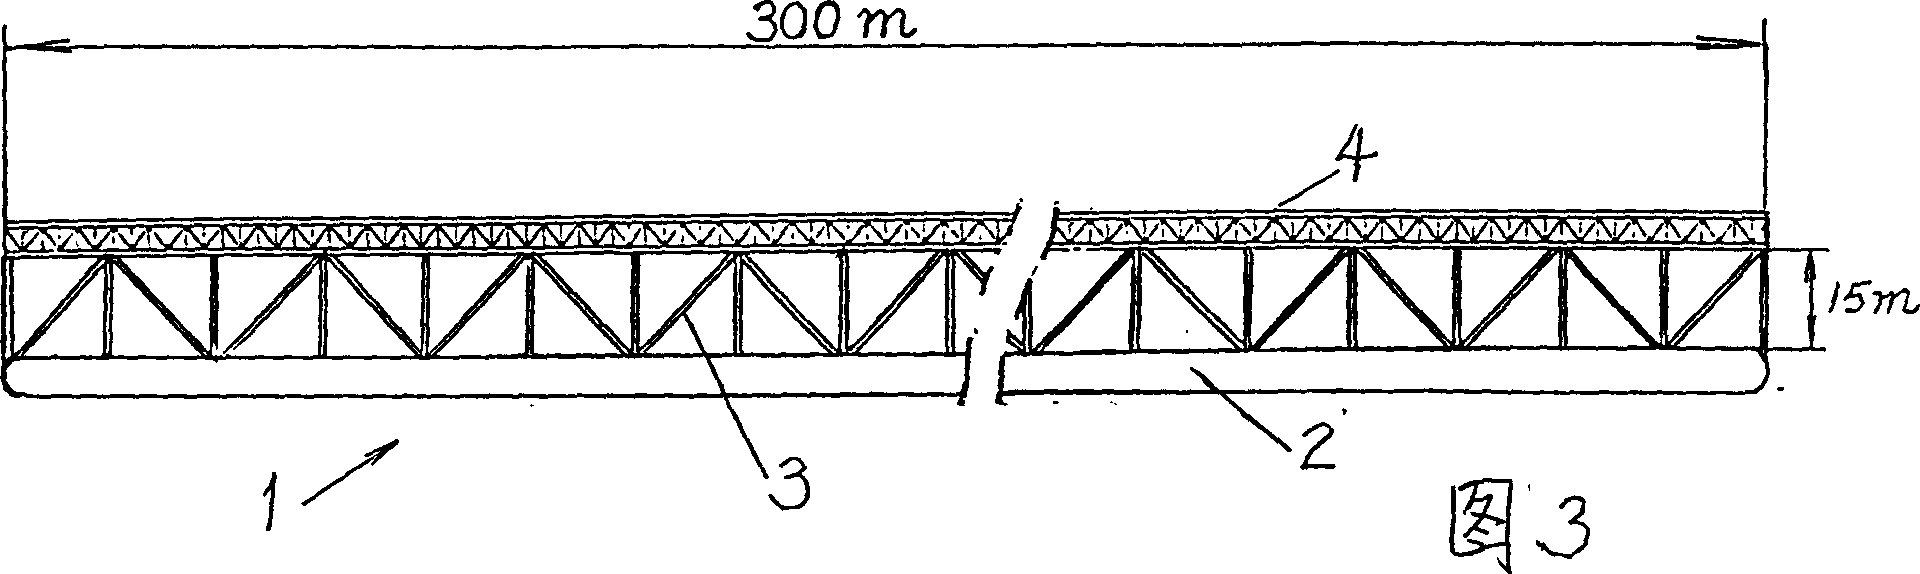 Super large truss type floating maine platform